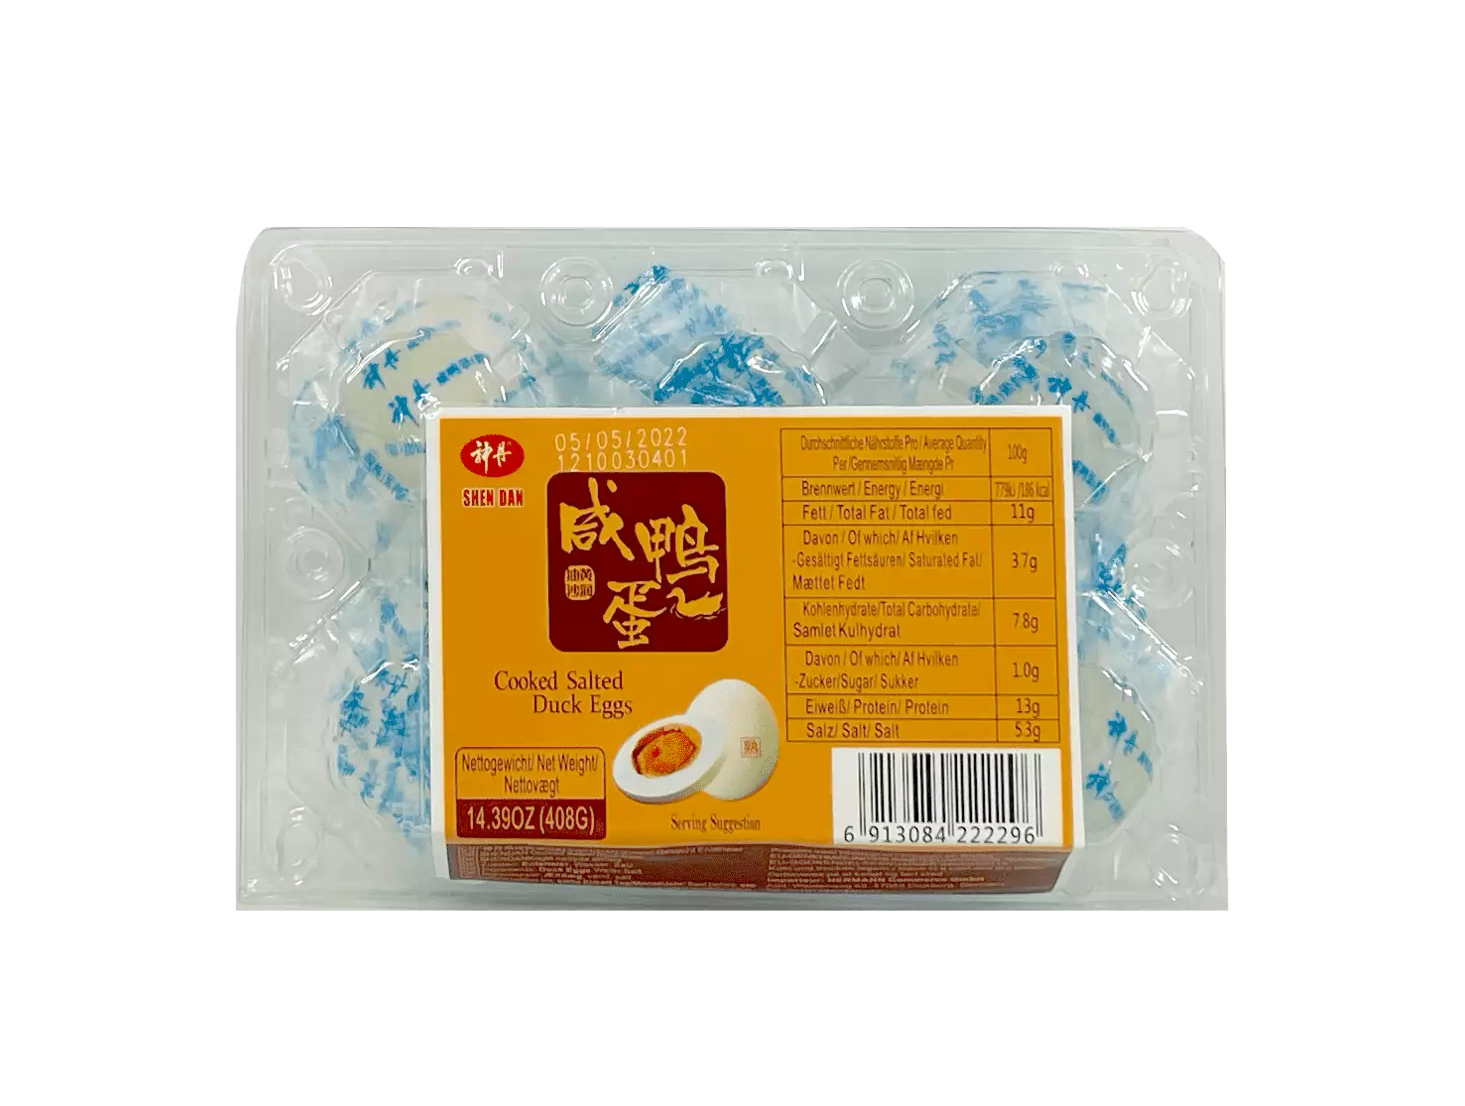 Duck Egg Salted 408g Shen Dan China